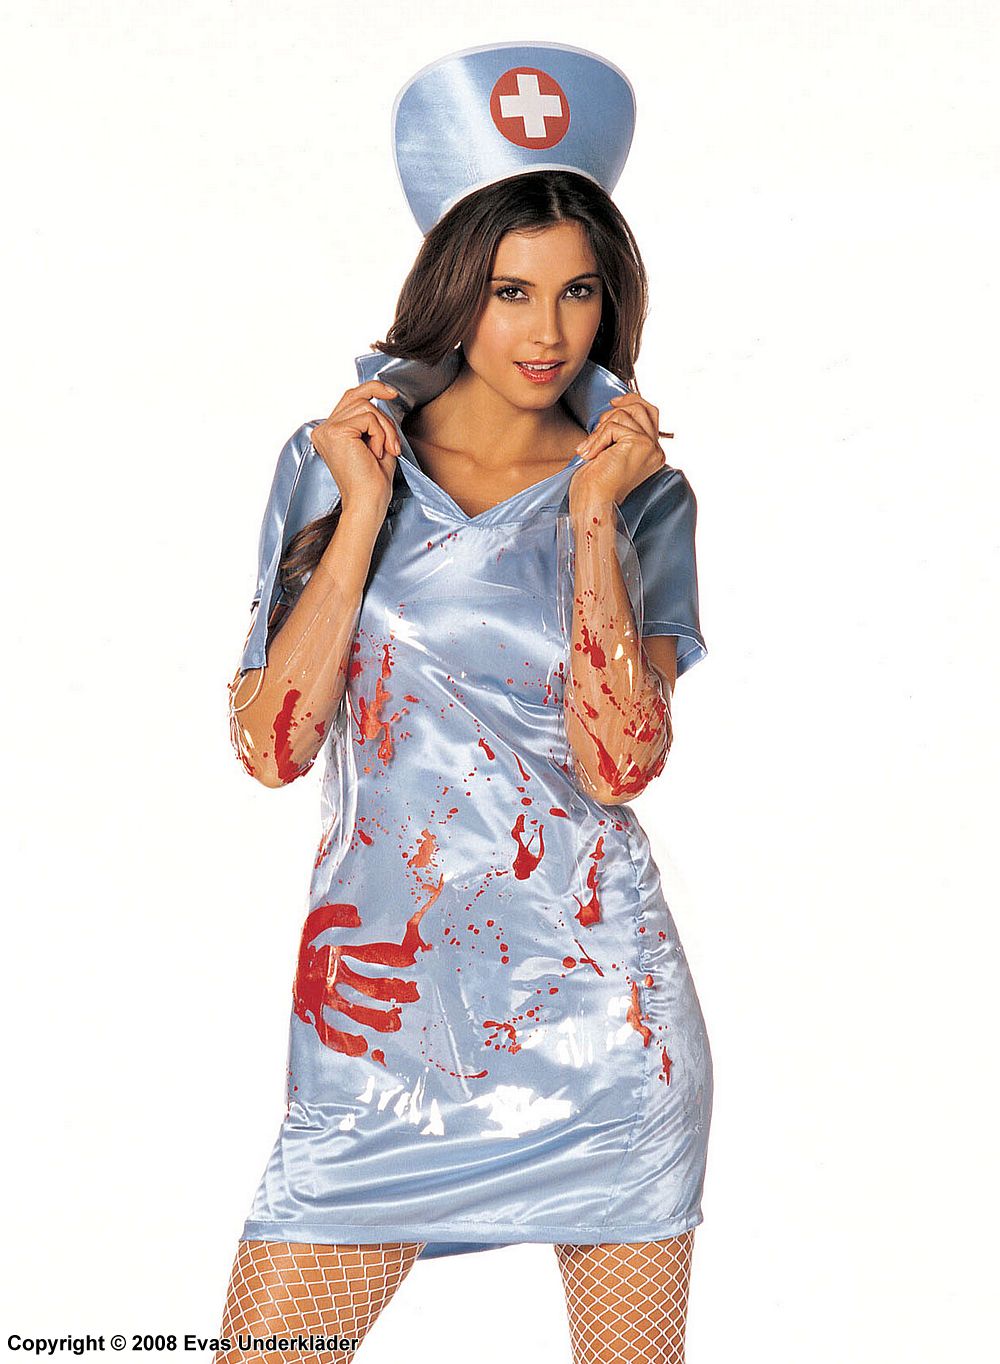 Bloody nurse costume